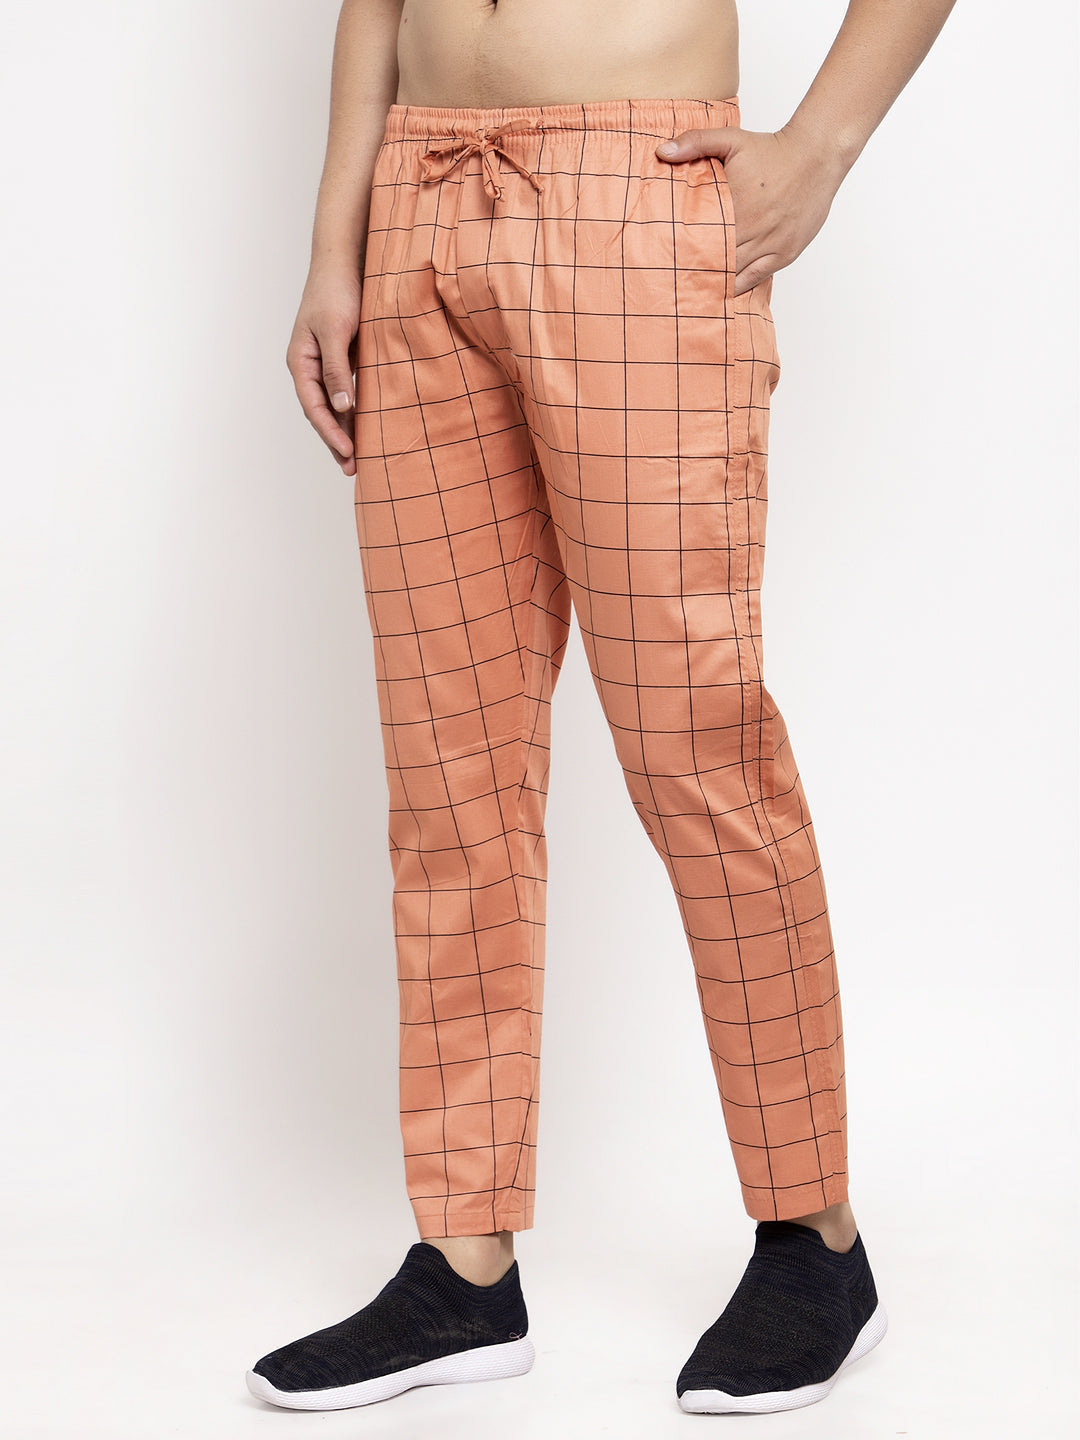 Men's Orange Checked Cotton Track Pants ( JOG 012Orange ) - Jainish